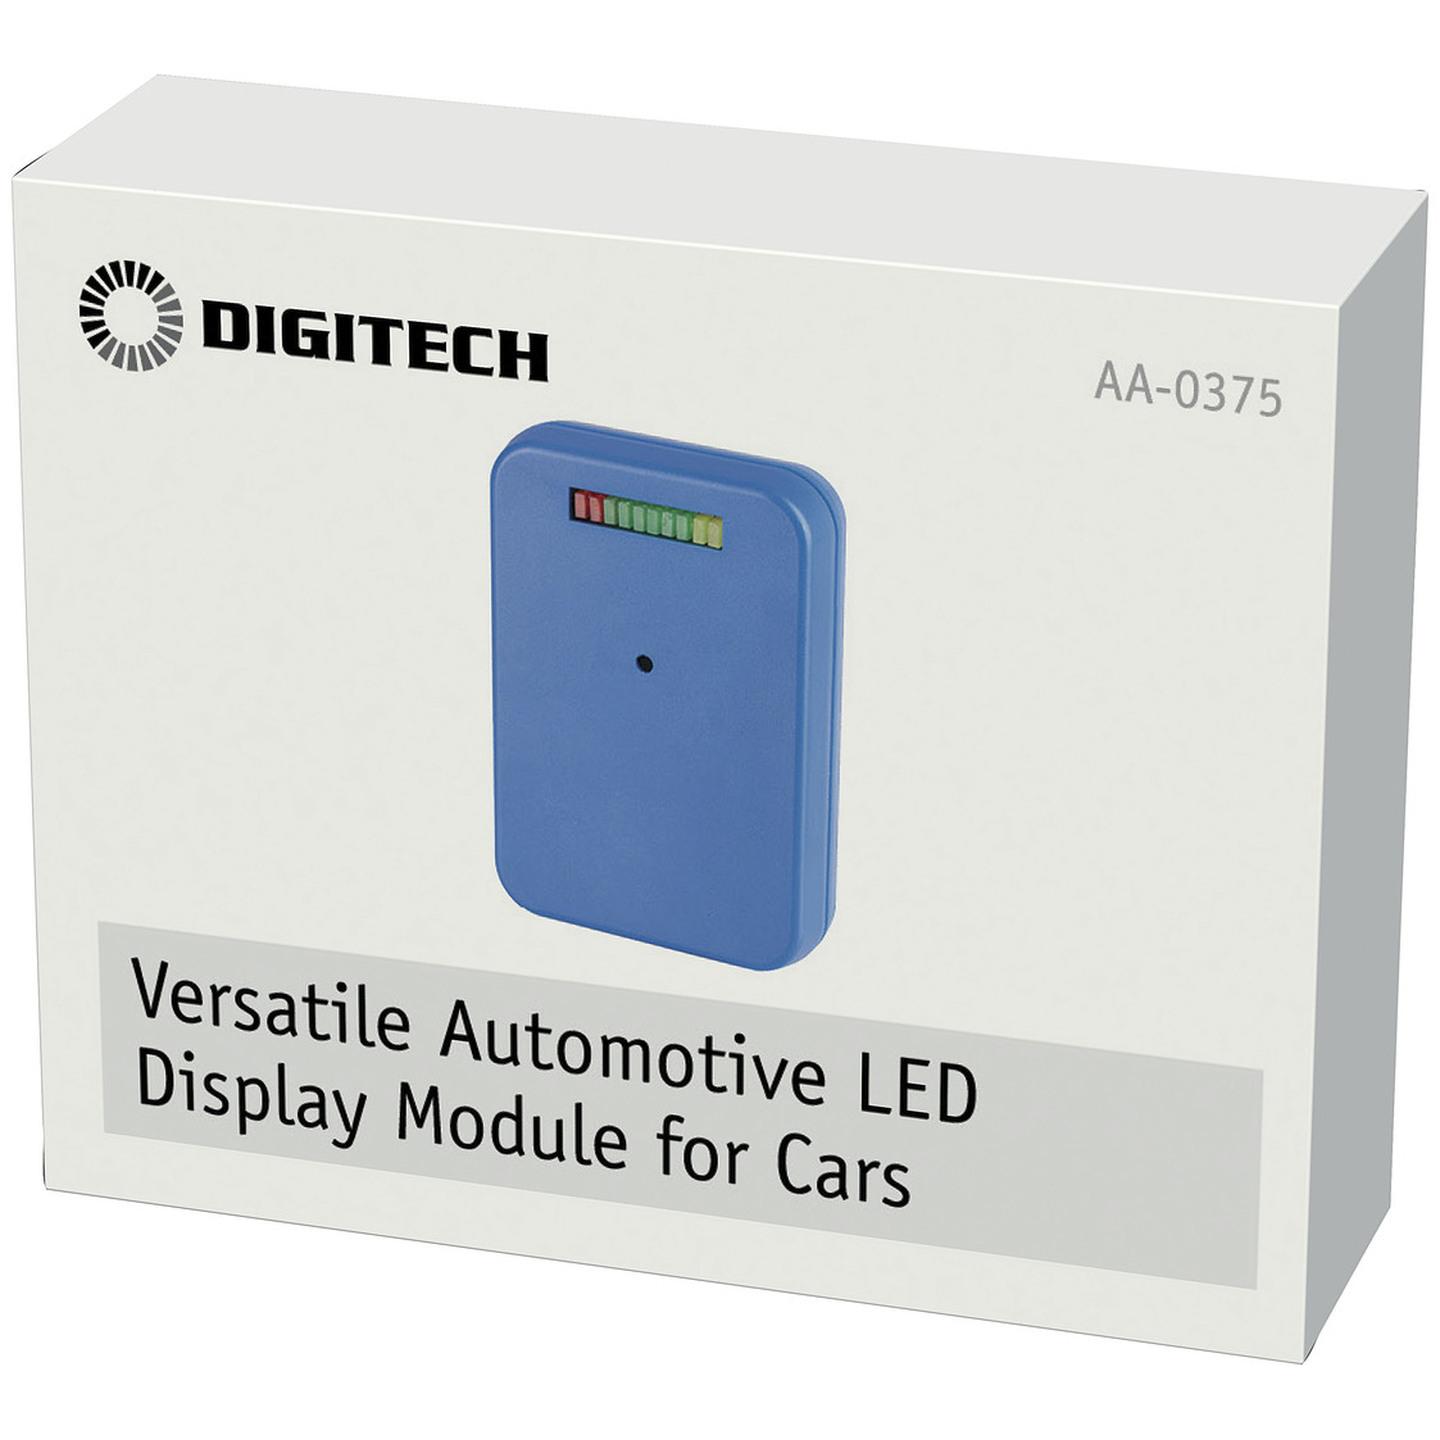 Versatile LED Display Module for Cars